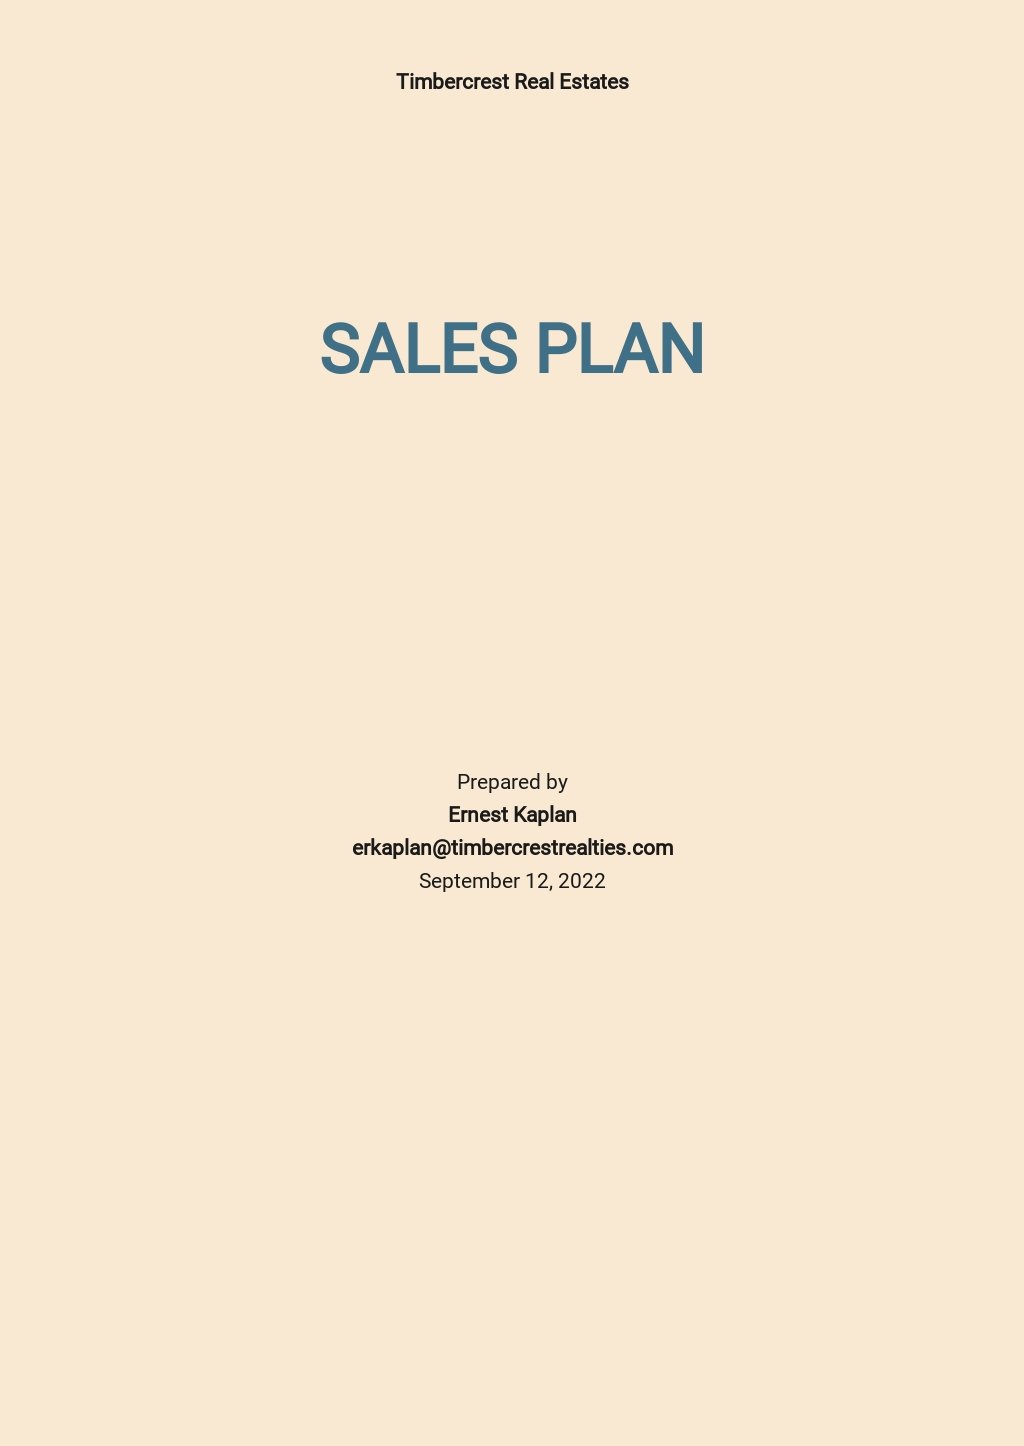 Sample Real Estate Sales Plan Template.jpe